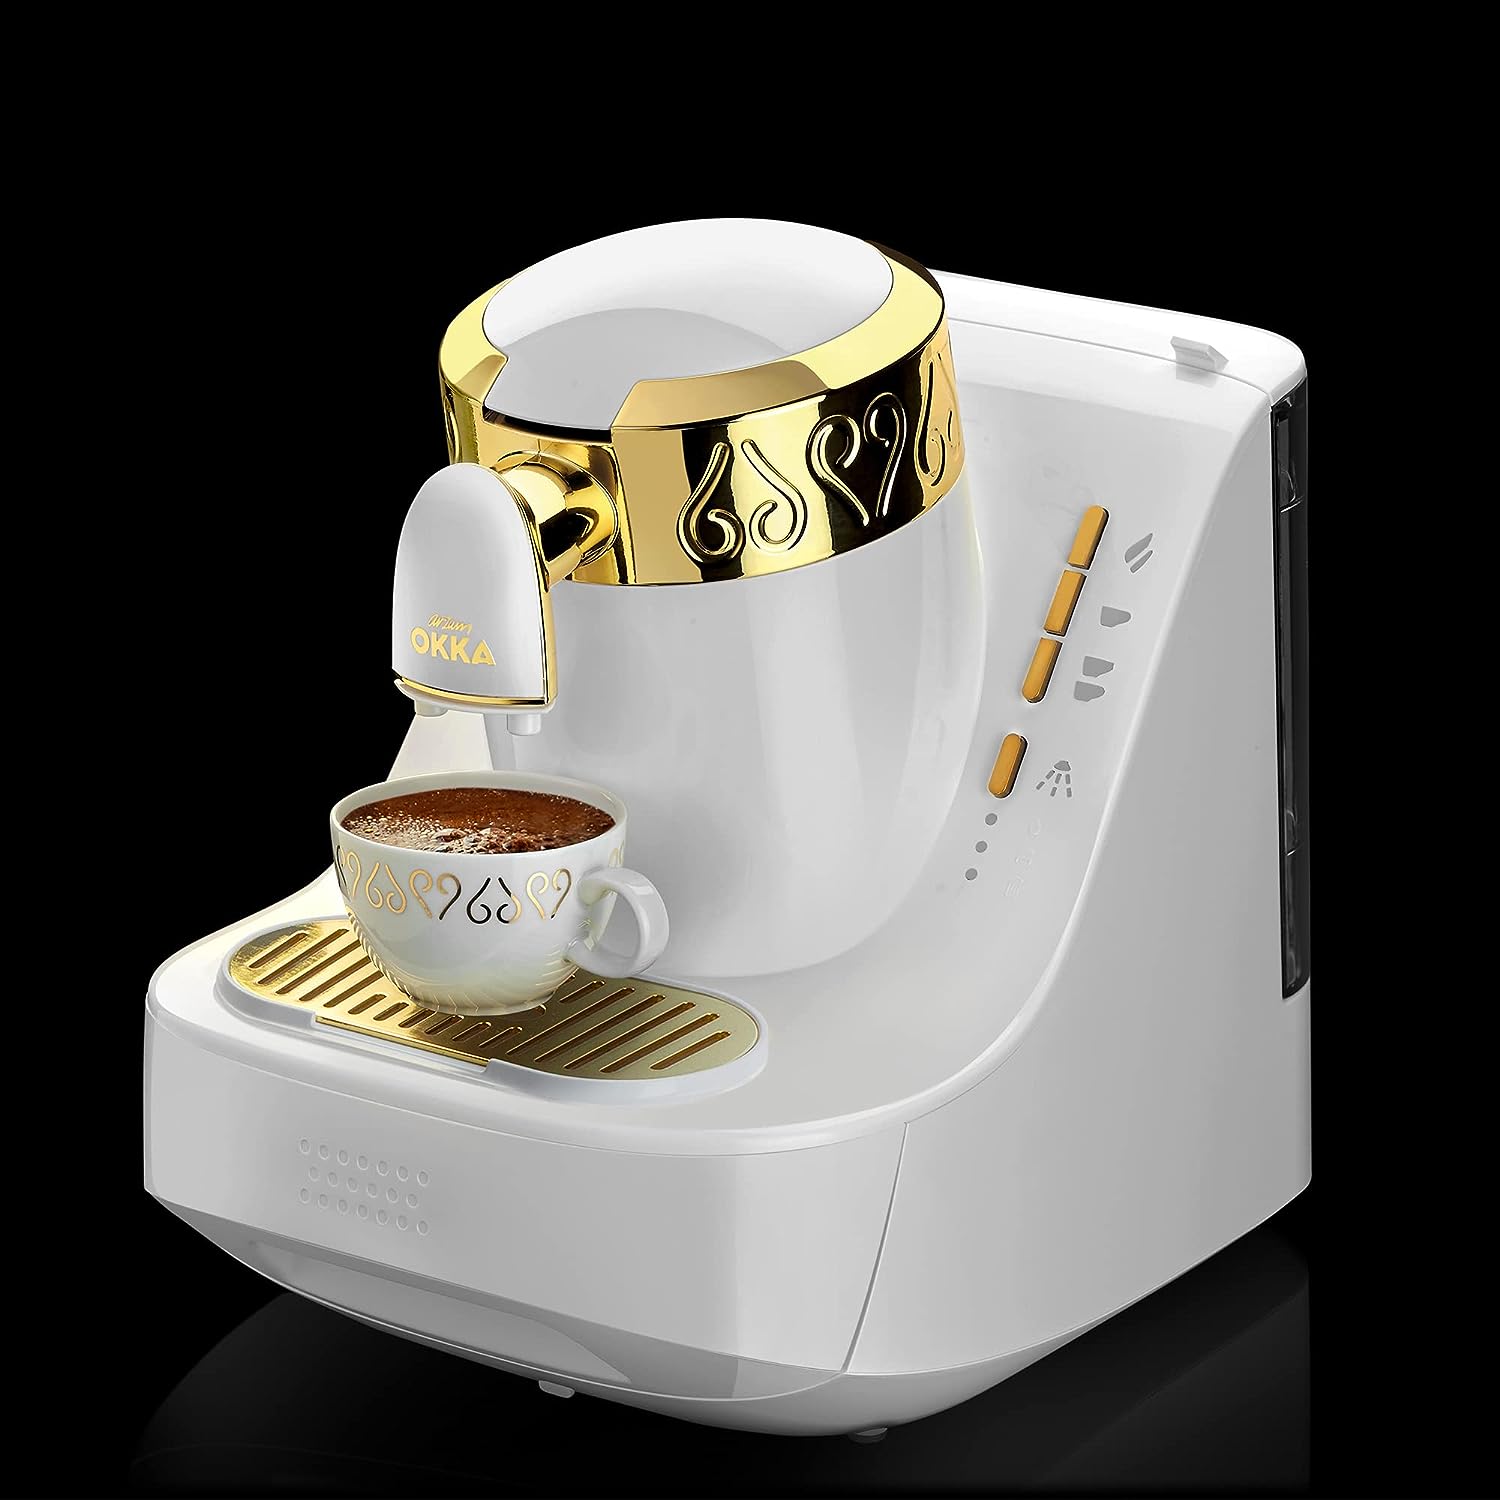 Arzum Okka Turkish Coffee Maker, 710 Watt, White x Gold, OK008B